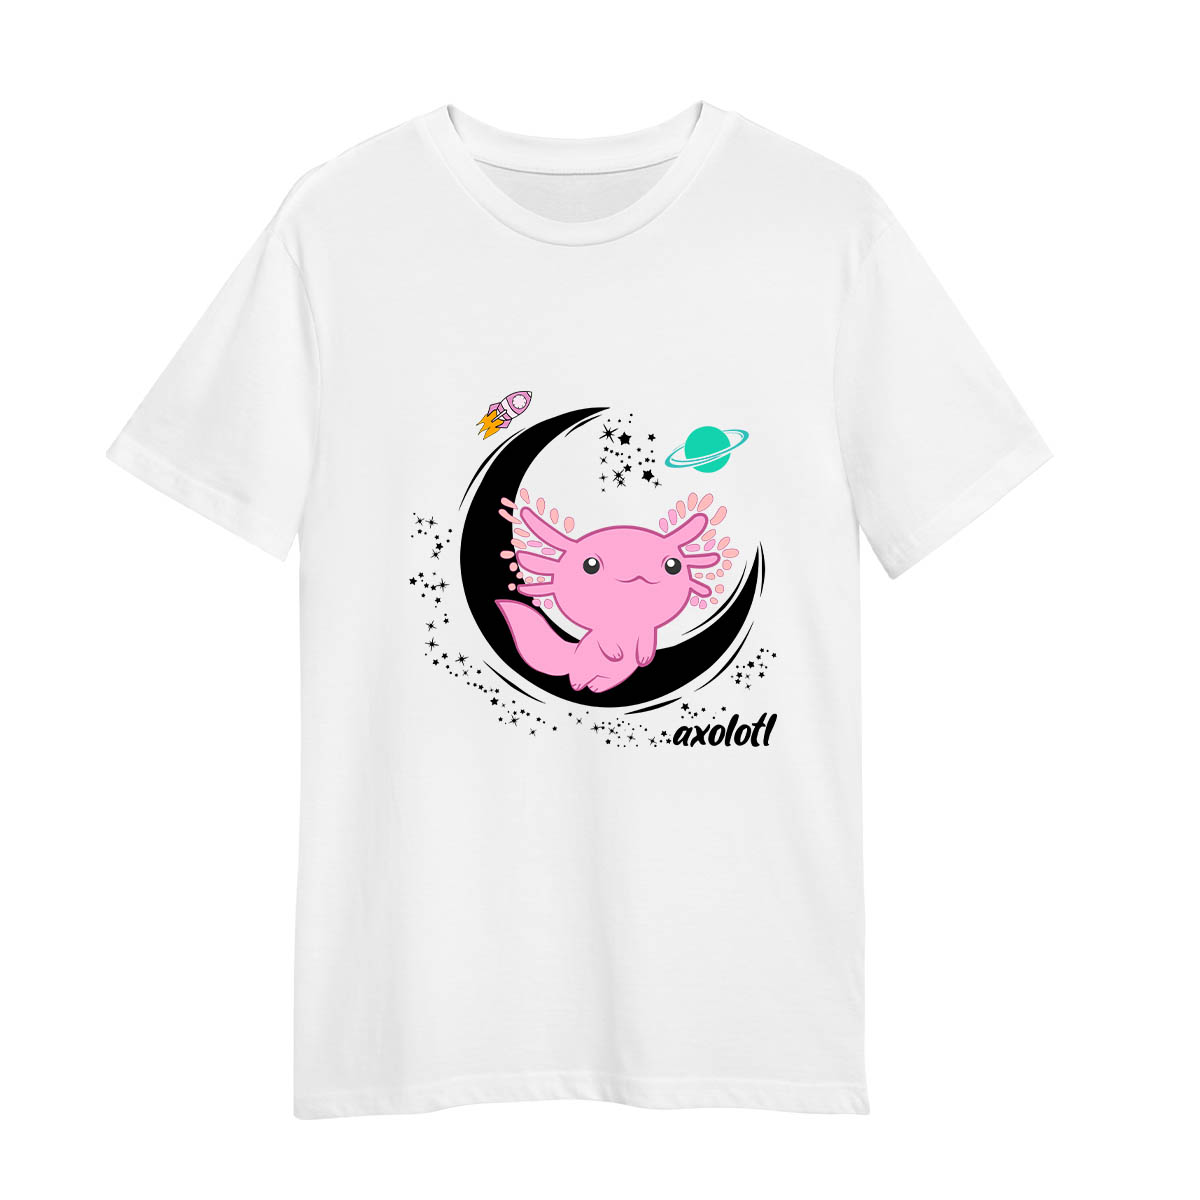 Space Axolotl Kawaii Pastel Goth Japan Anime Comic Adult Unisex White T-shirt